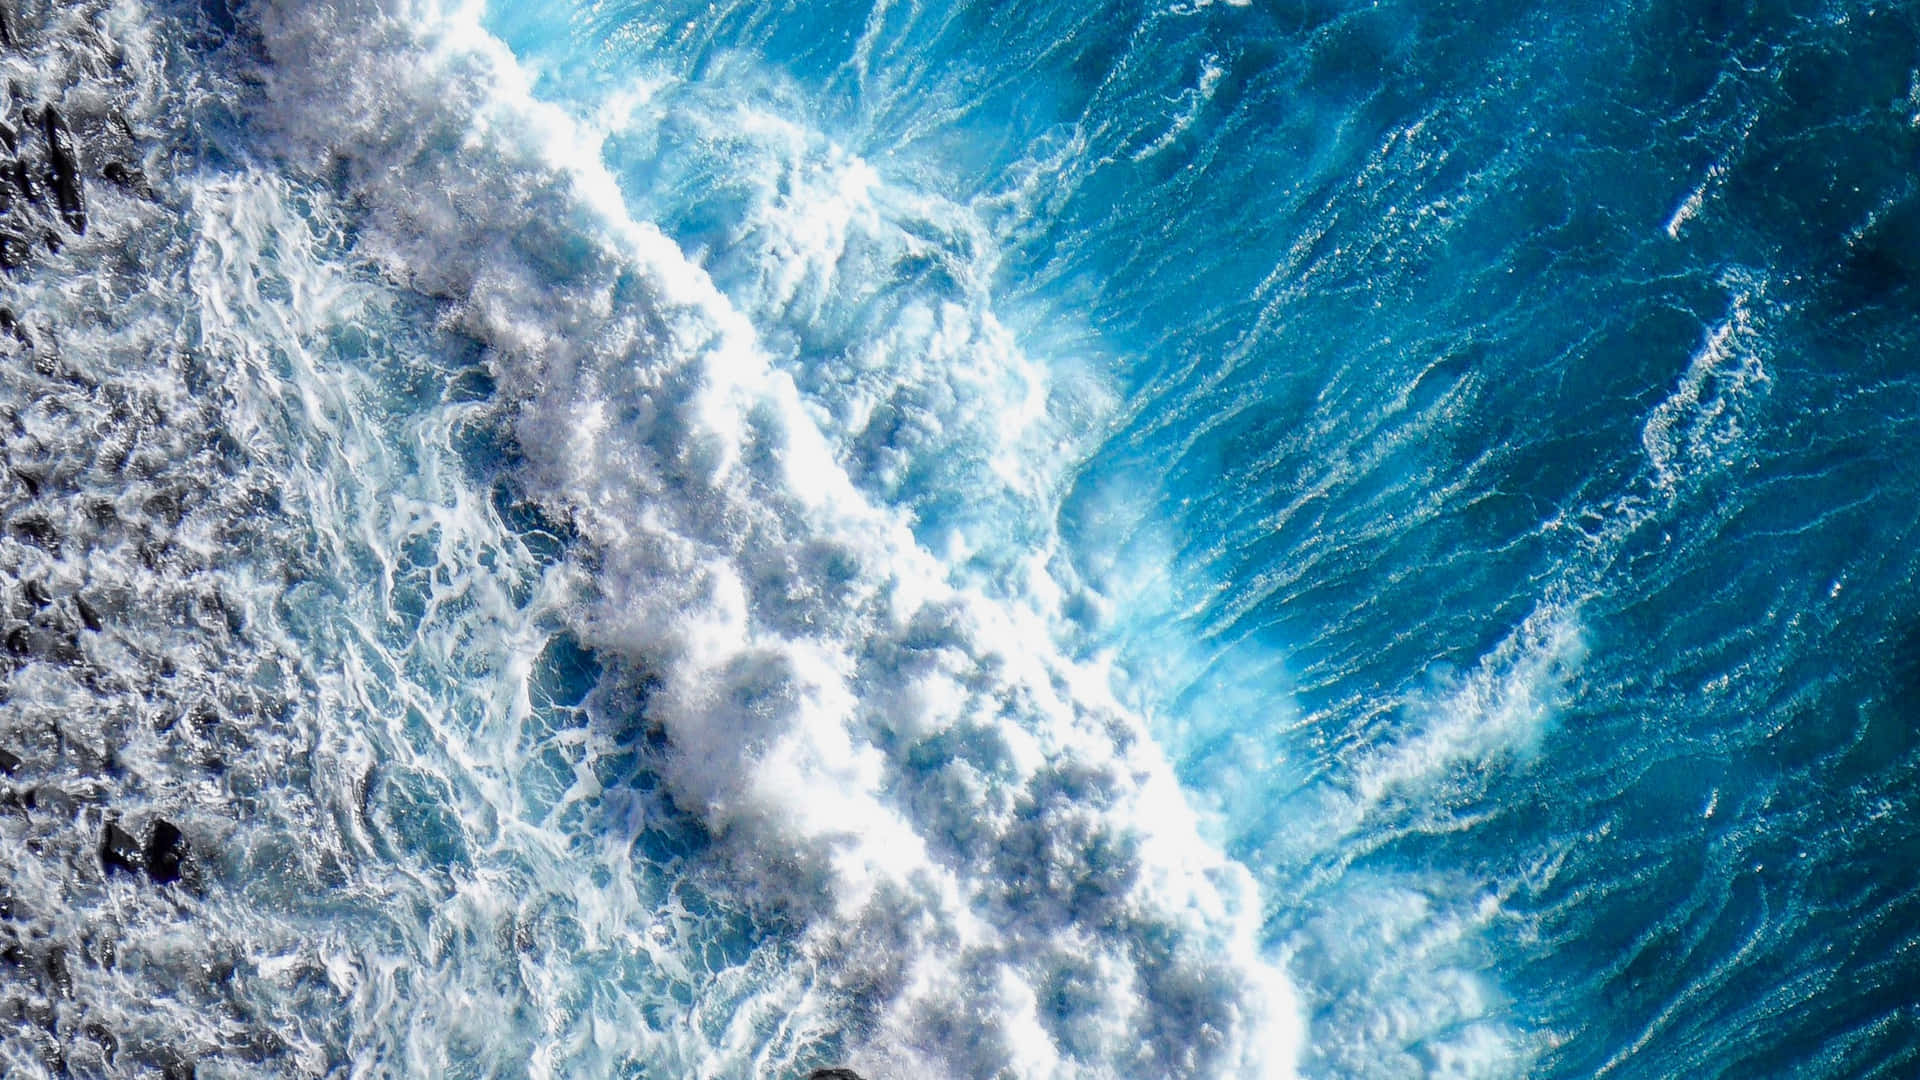 Ocean 3840 X 2160 Background